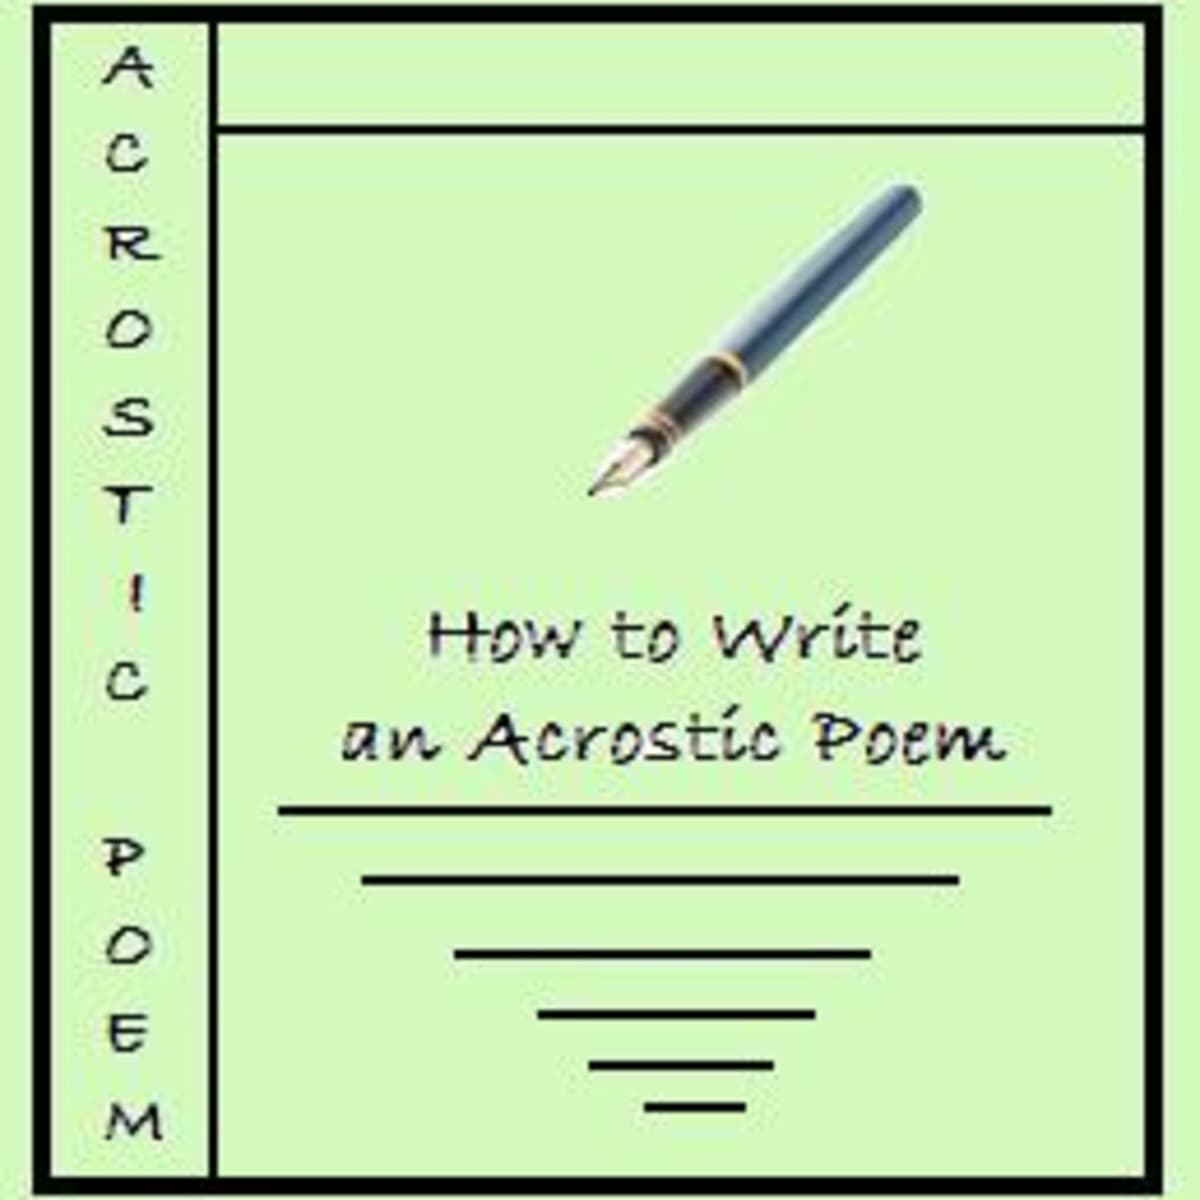 family acrostic poem examples